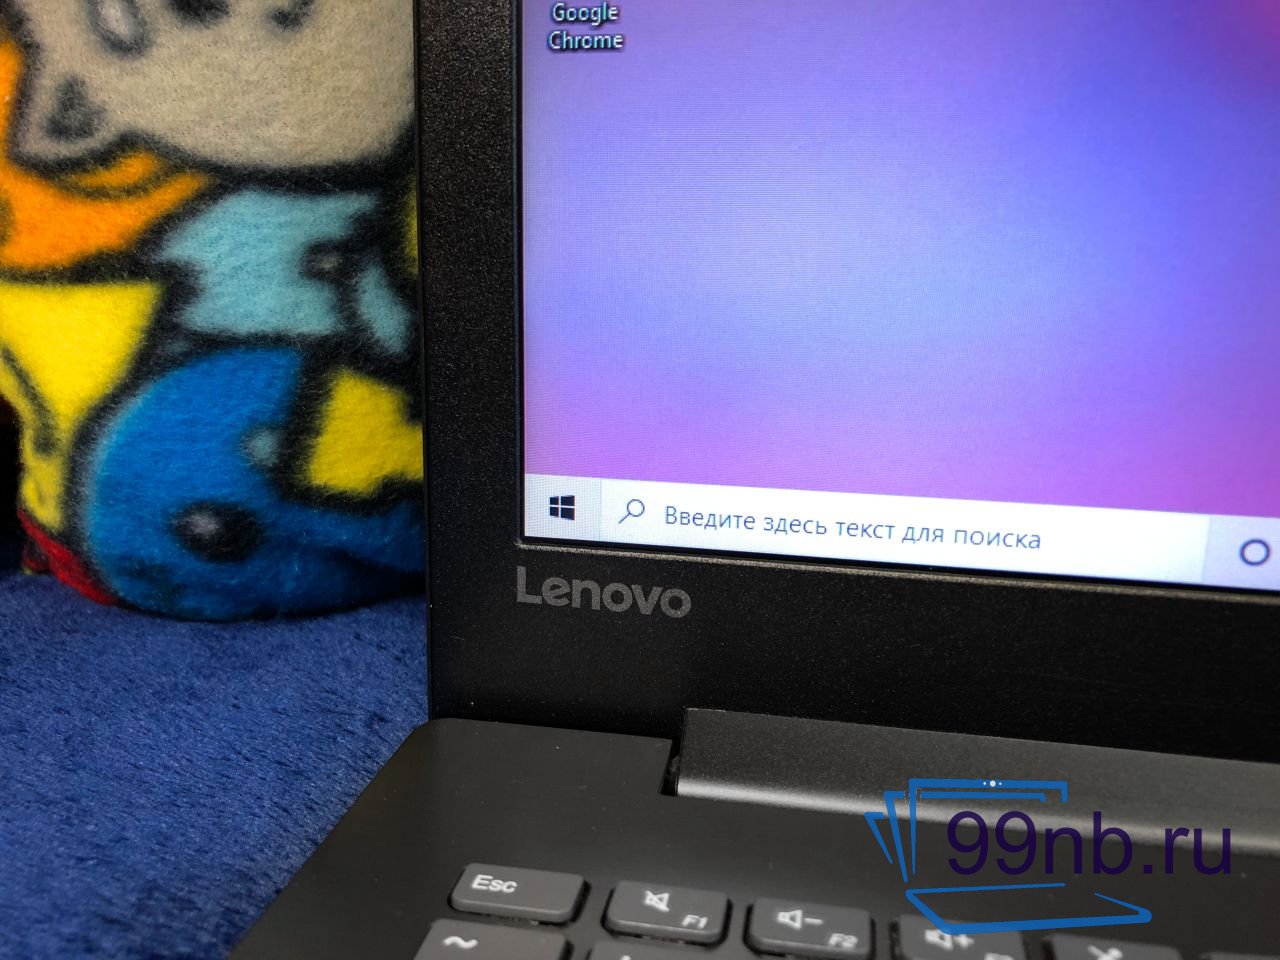  Ноутбук Lenovo Ideapad для фриланса Geforce+HDD